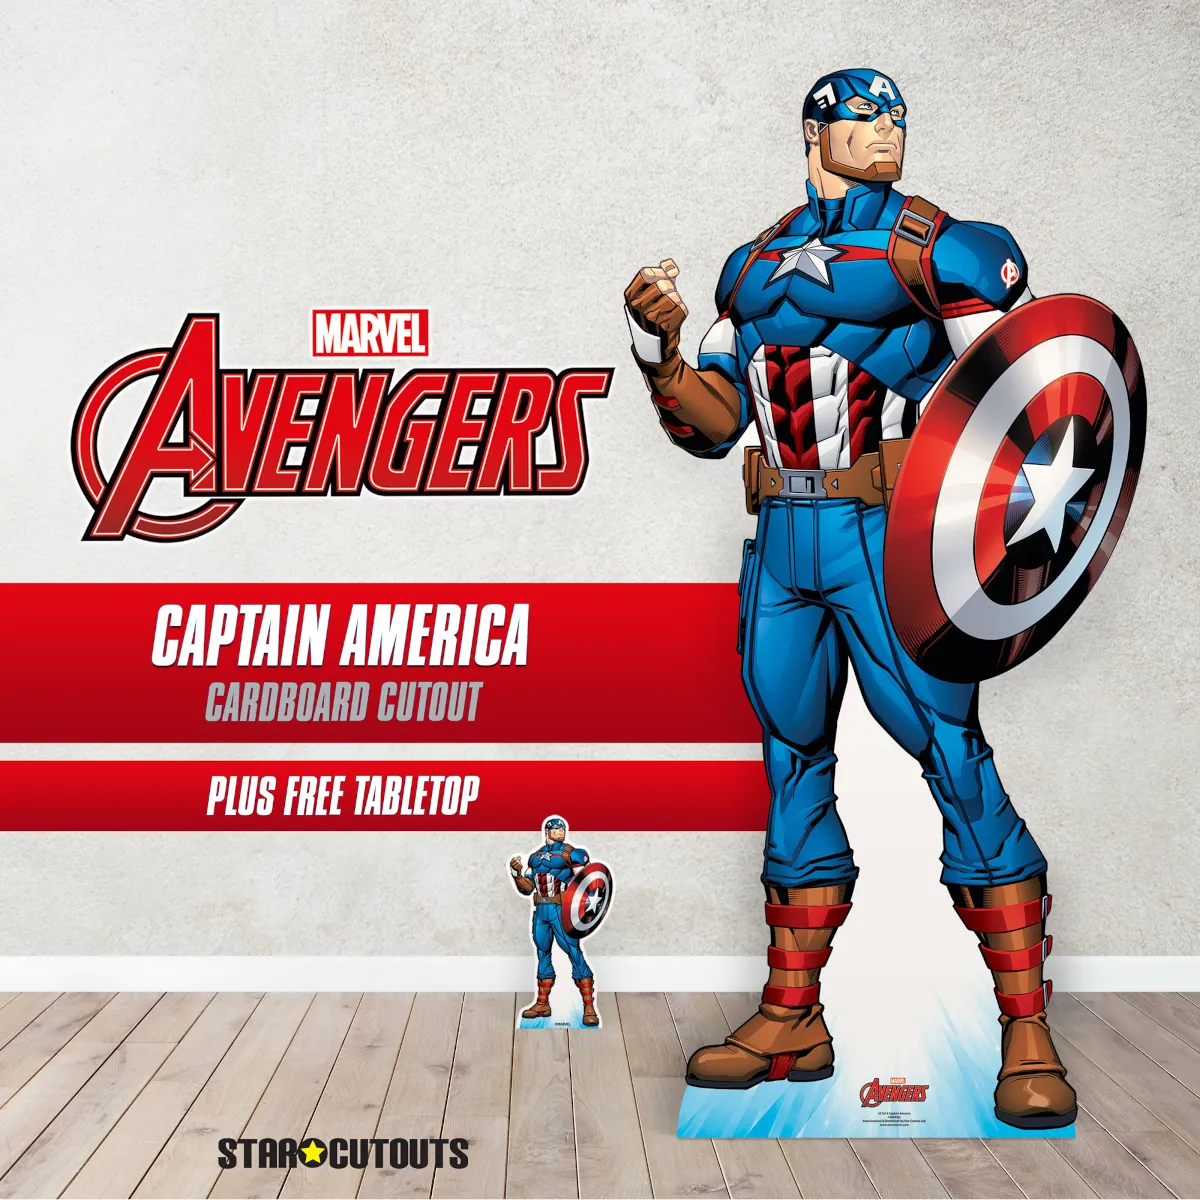 Captain America 'Superhero' (Marvel Avengers) Lifesize + Mini Cardboard Cutout Room